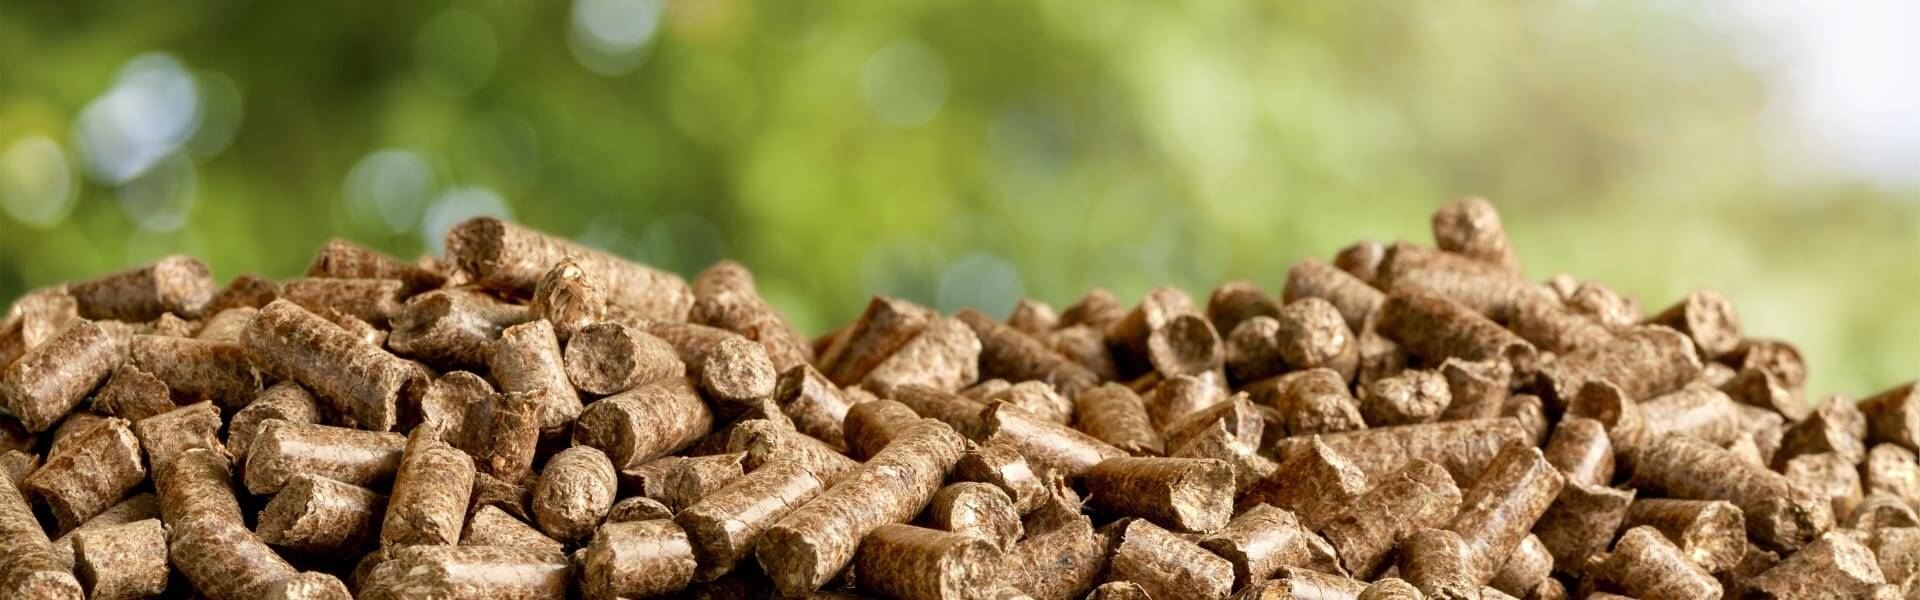 REA: Reform farm subsidies to encourage biomass power